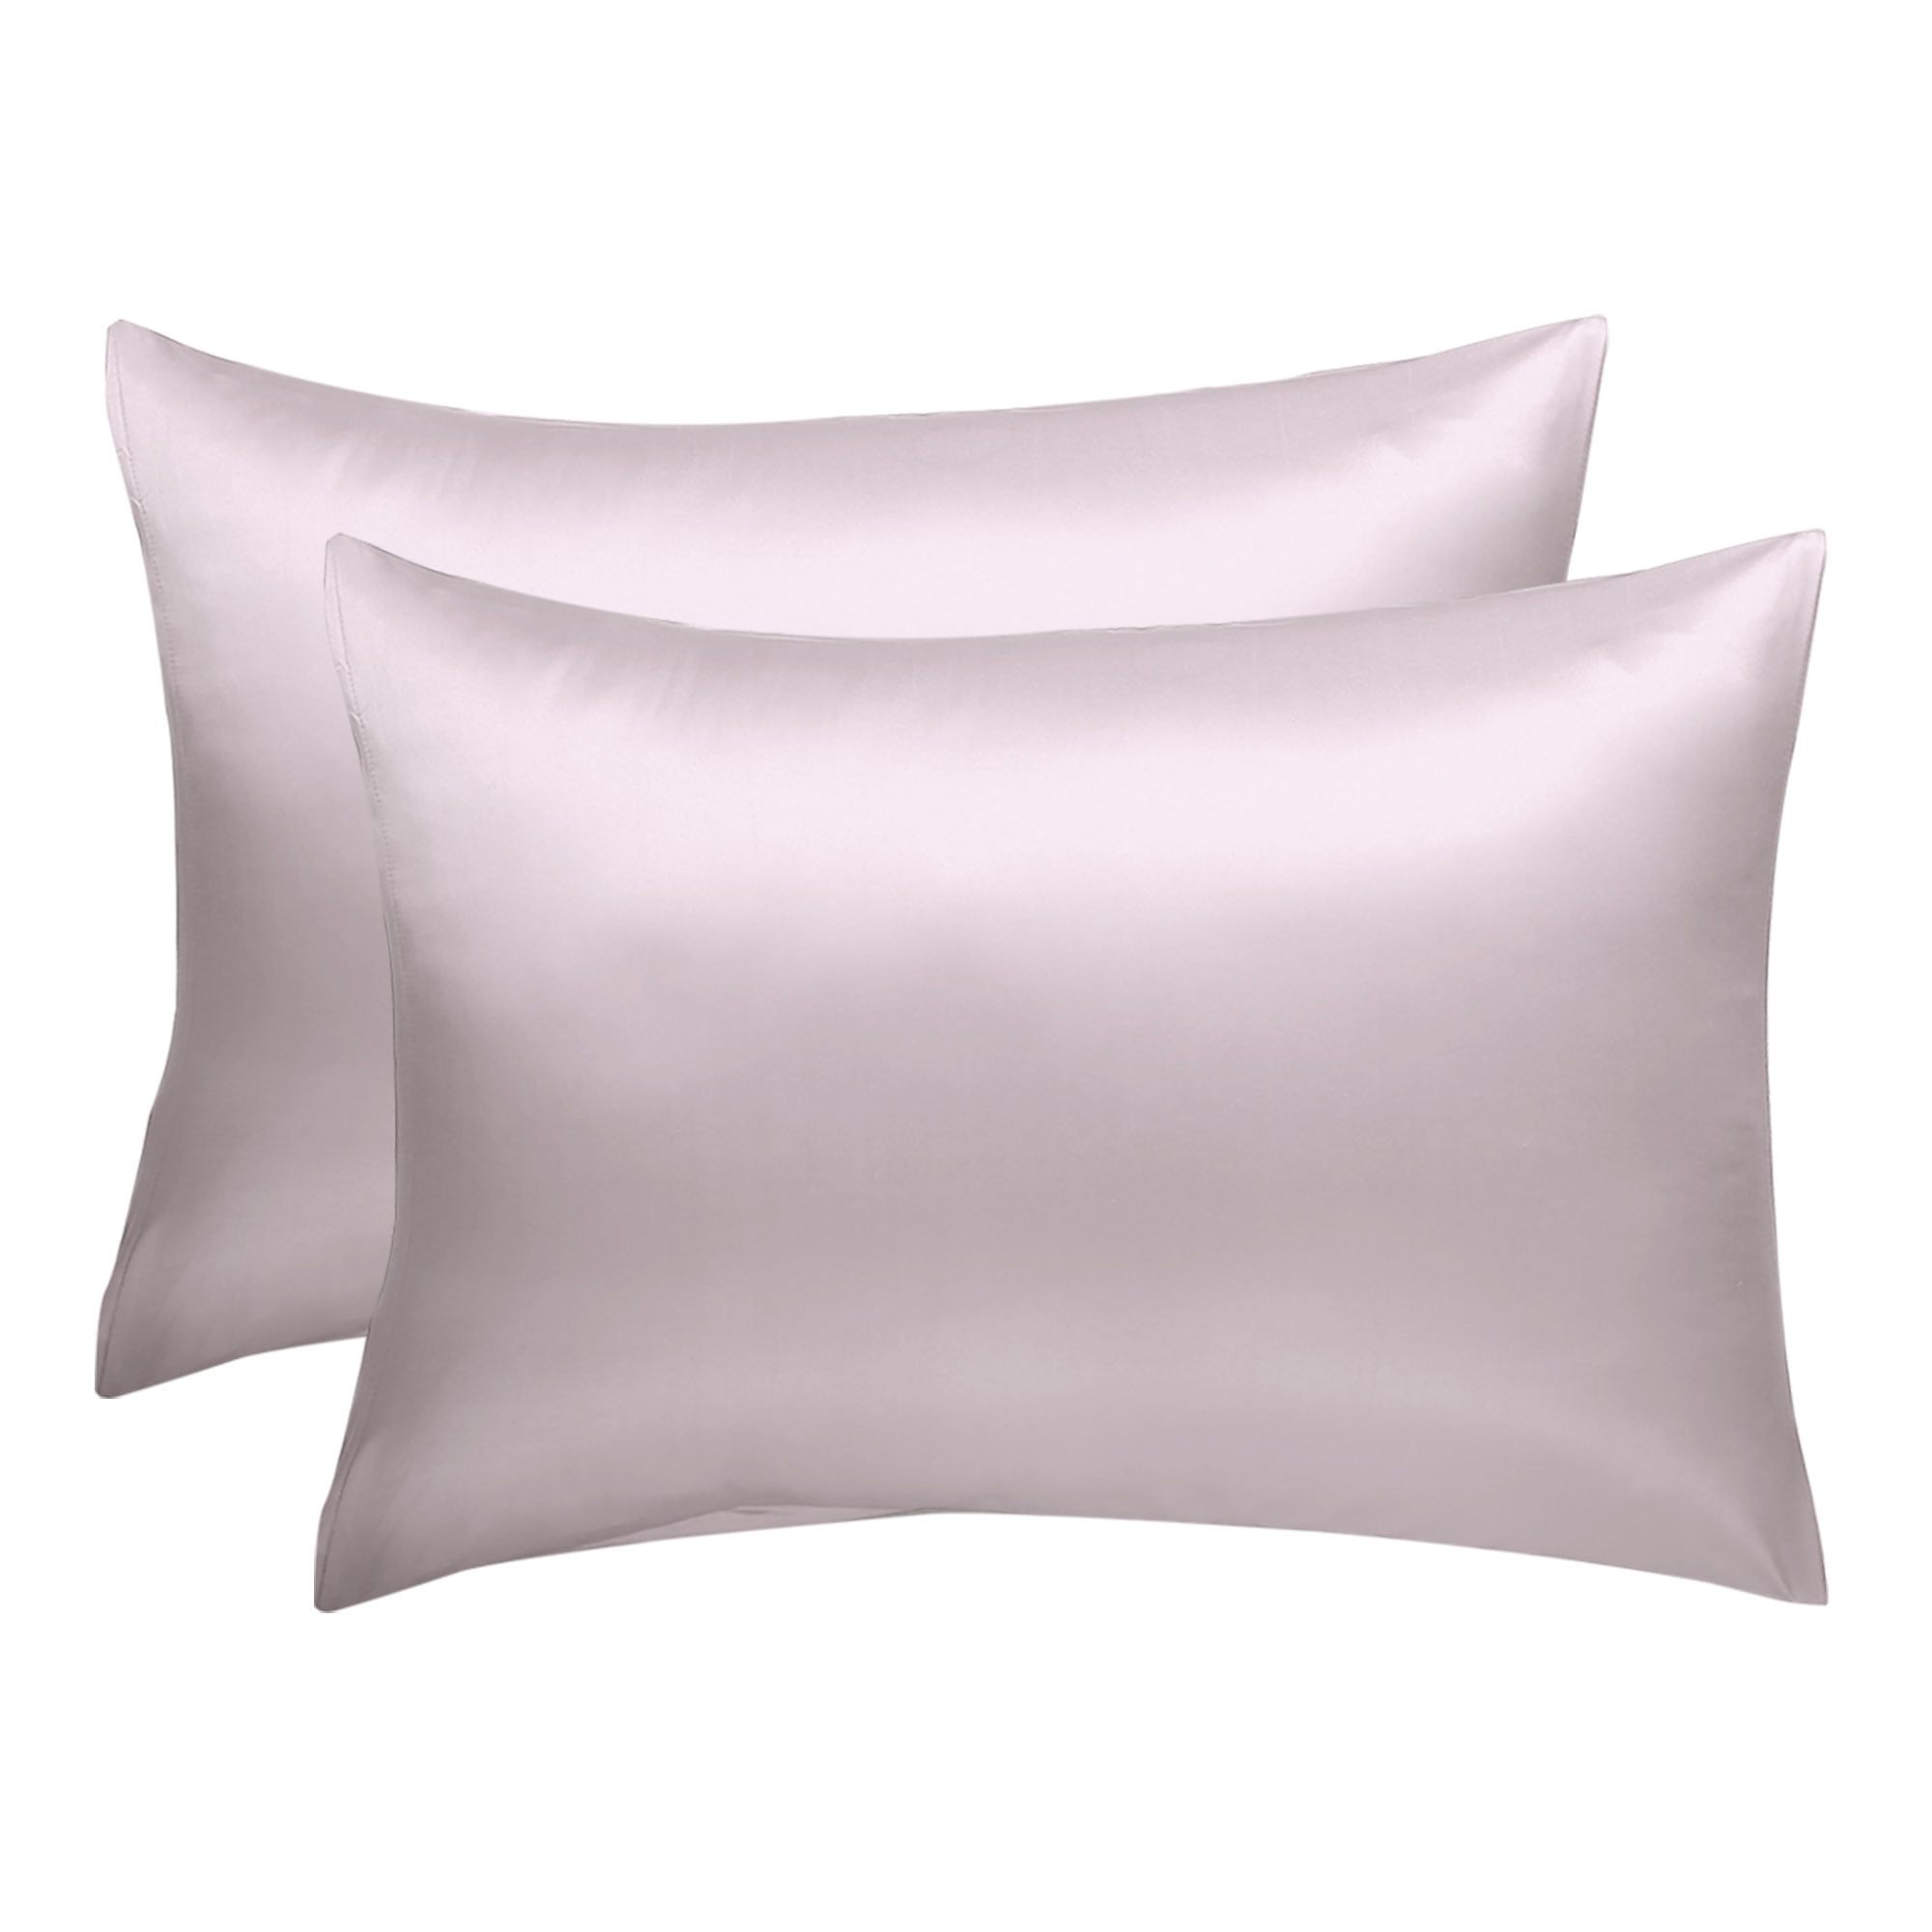 Details about   A pair Standard Queen King Satin Silk Pillowcase Pillow Case Cover Home Bedding 